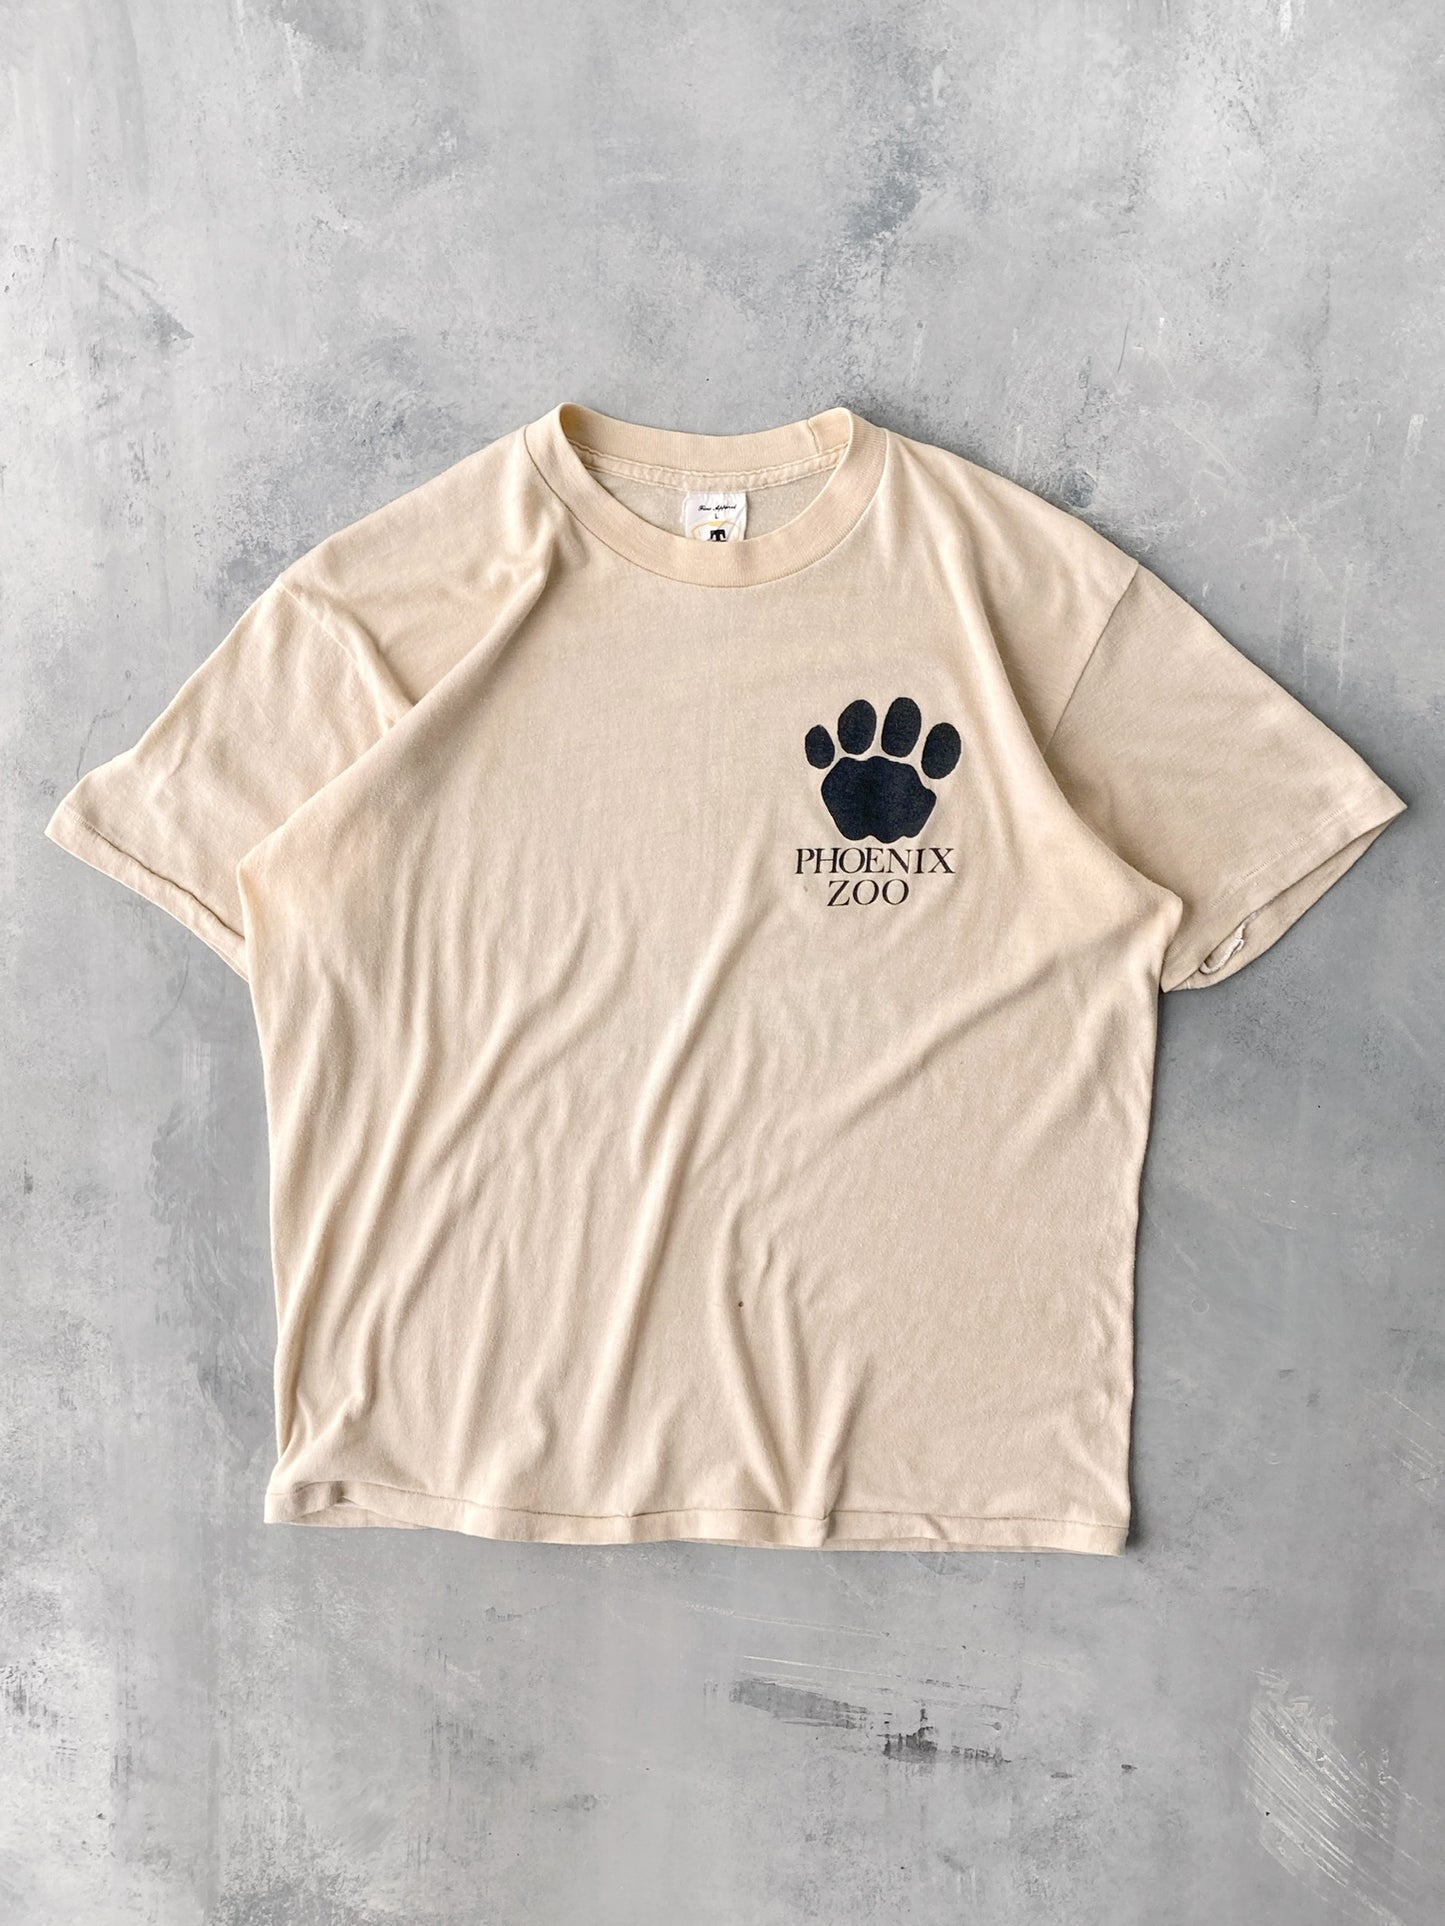 Phoenix Zoo T-Shirt 80's - Medium